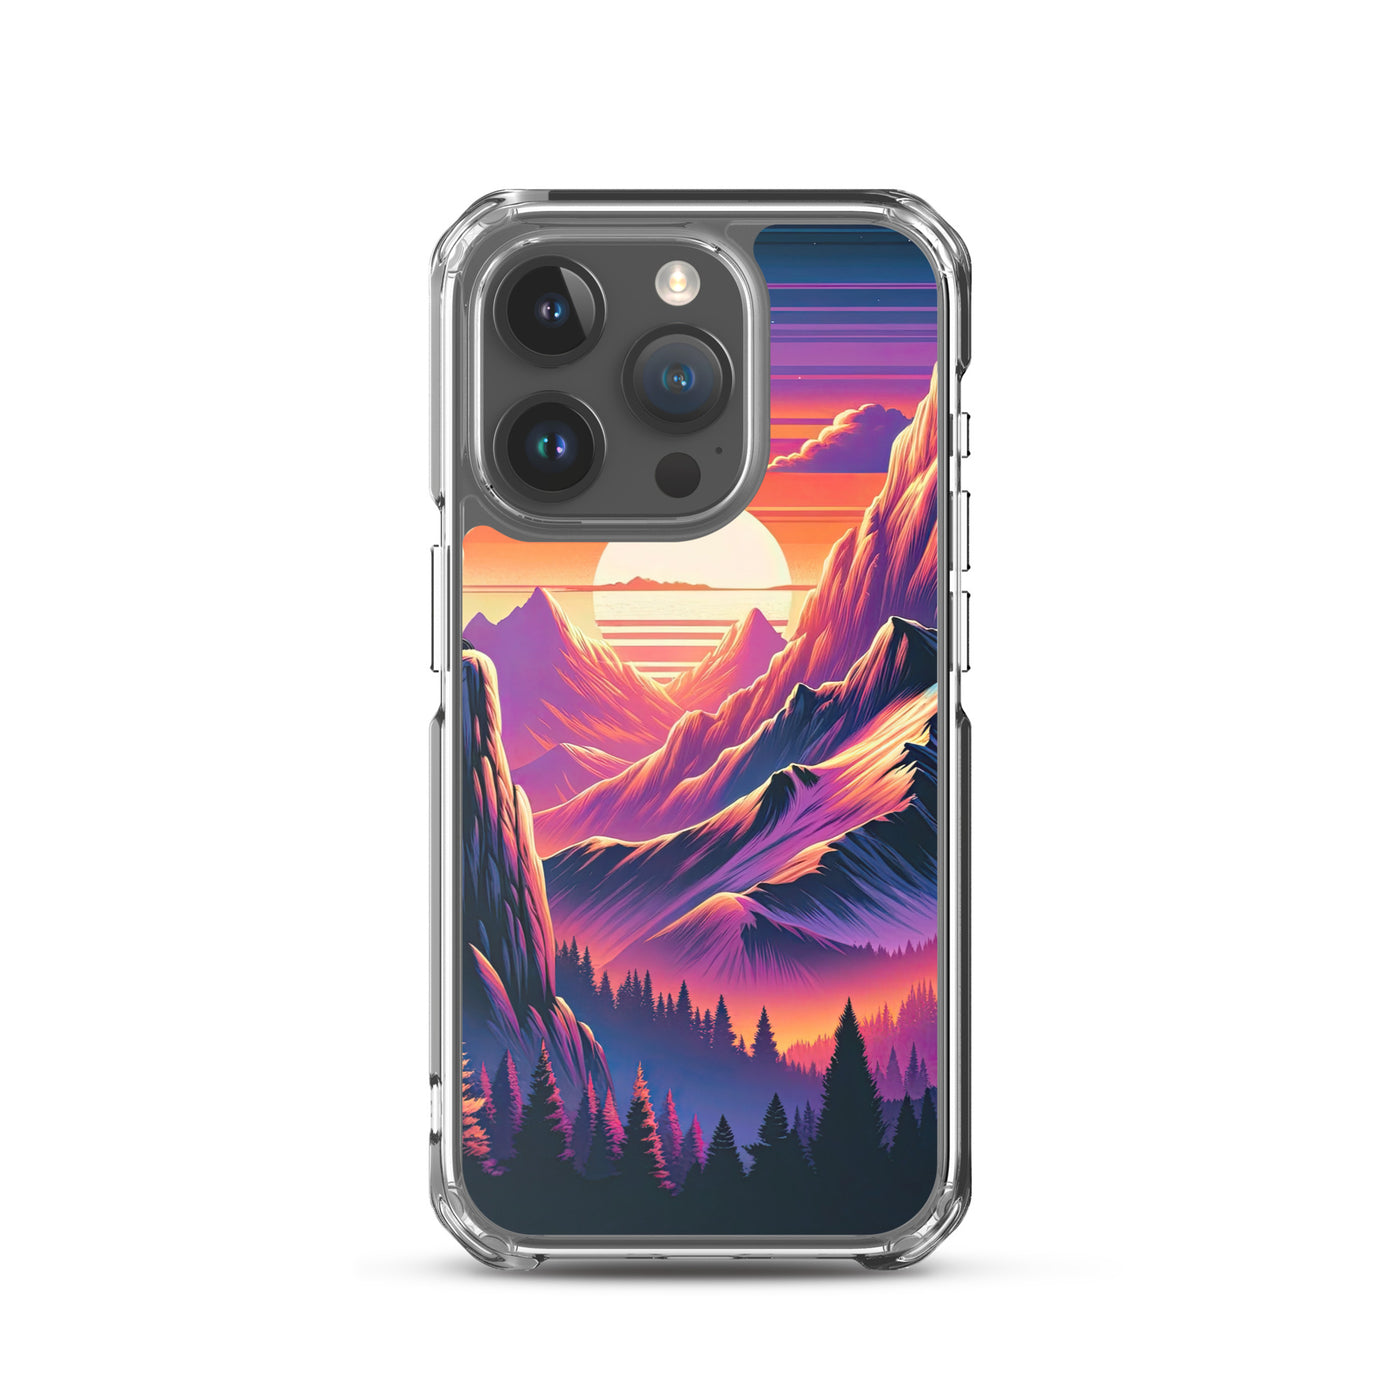 Alpen-Sonnenuntergang mit Bär auf Hügel, warmes Himmelsfarbenspiel - iPhone Schutzhülle (durchsichtig) camping xxx yyy zzz iPhone 15 Pro